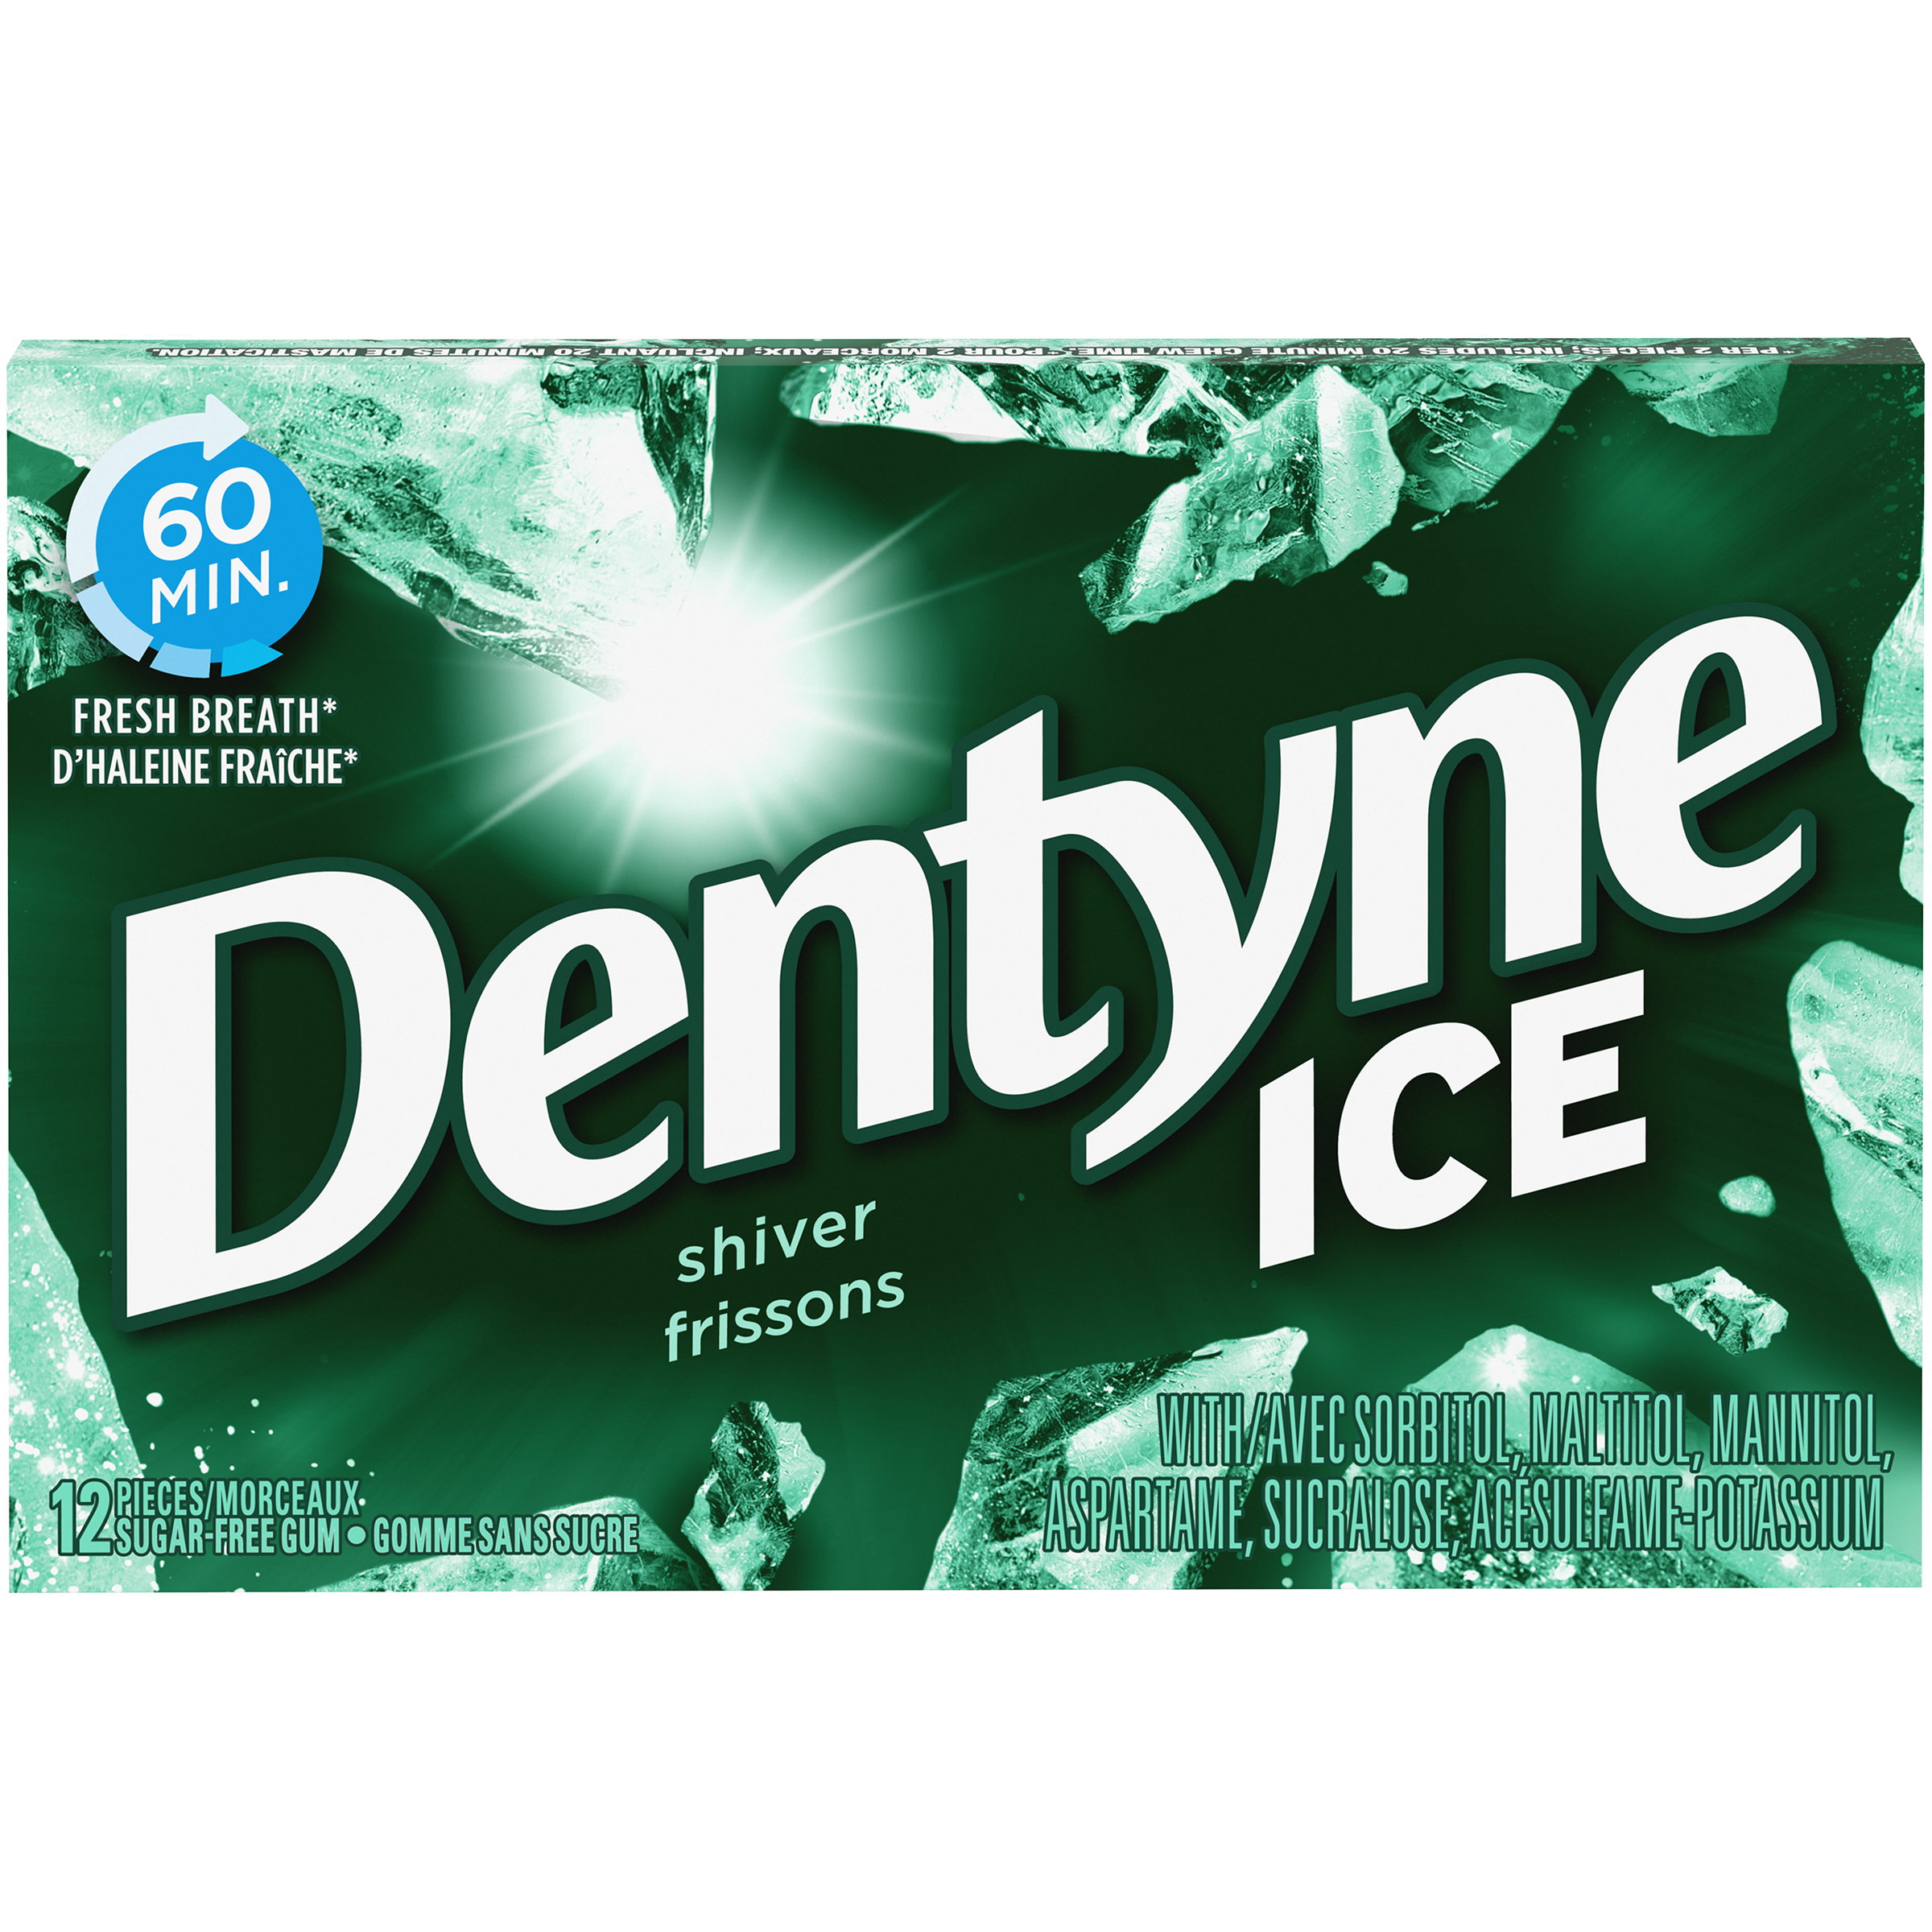 DENTYNE ICE FRISSONS 12MCX